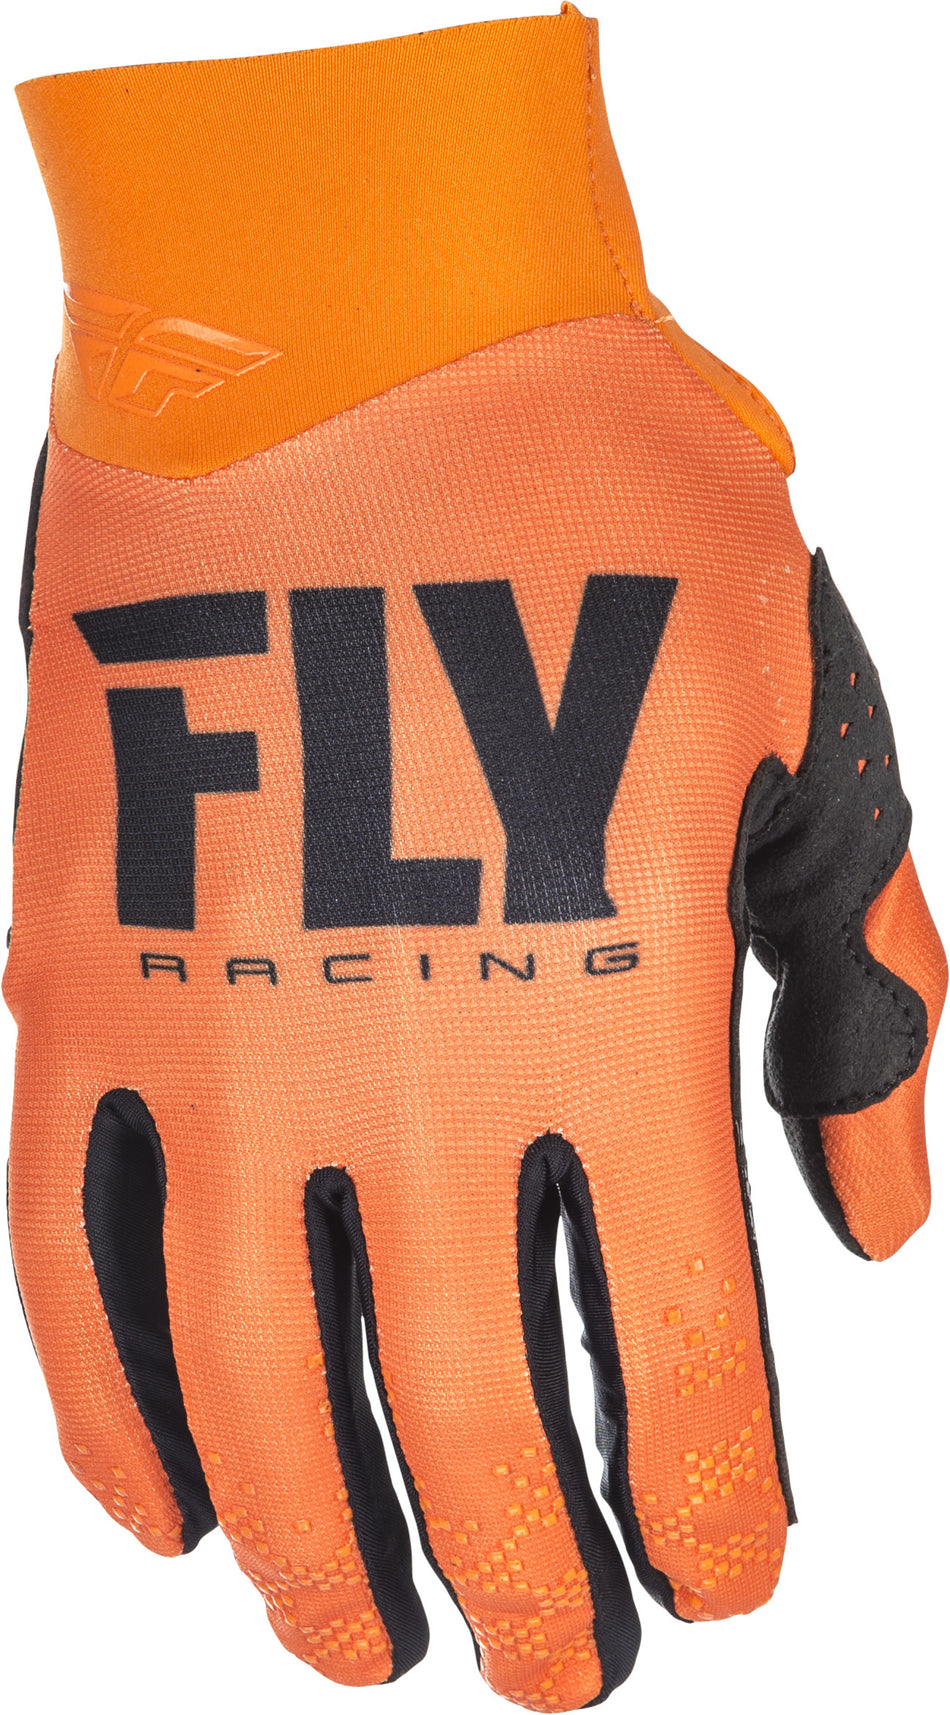 FLY RACING Pro Lite Gloves Orange Sz 10 371-81810